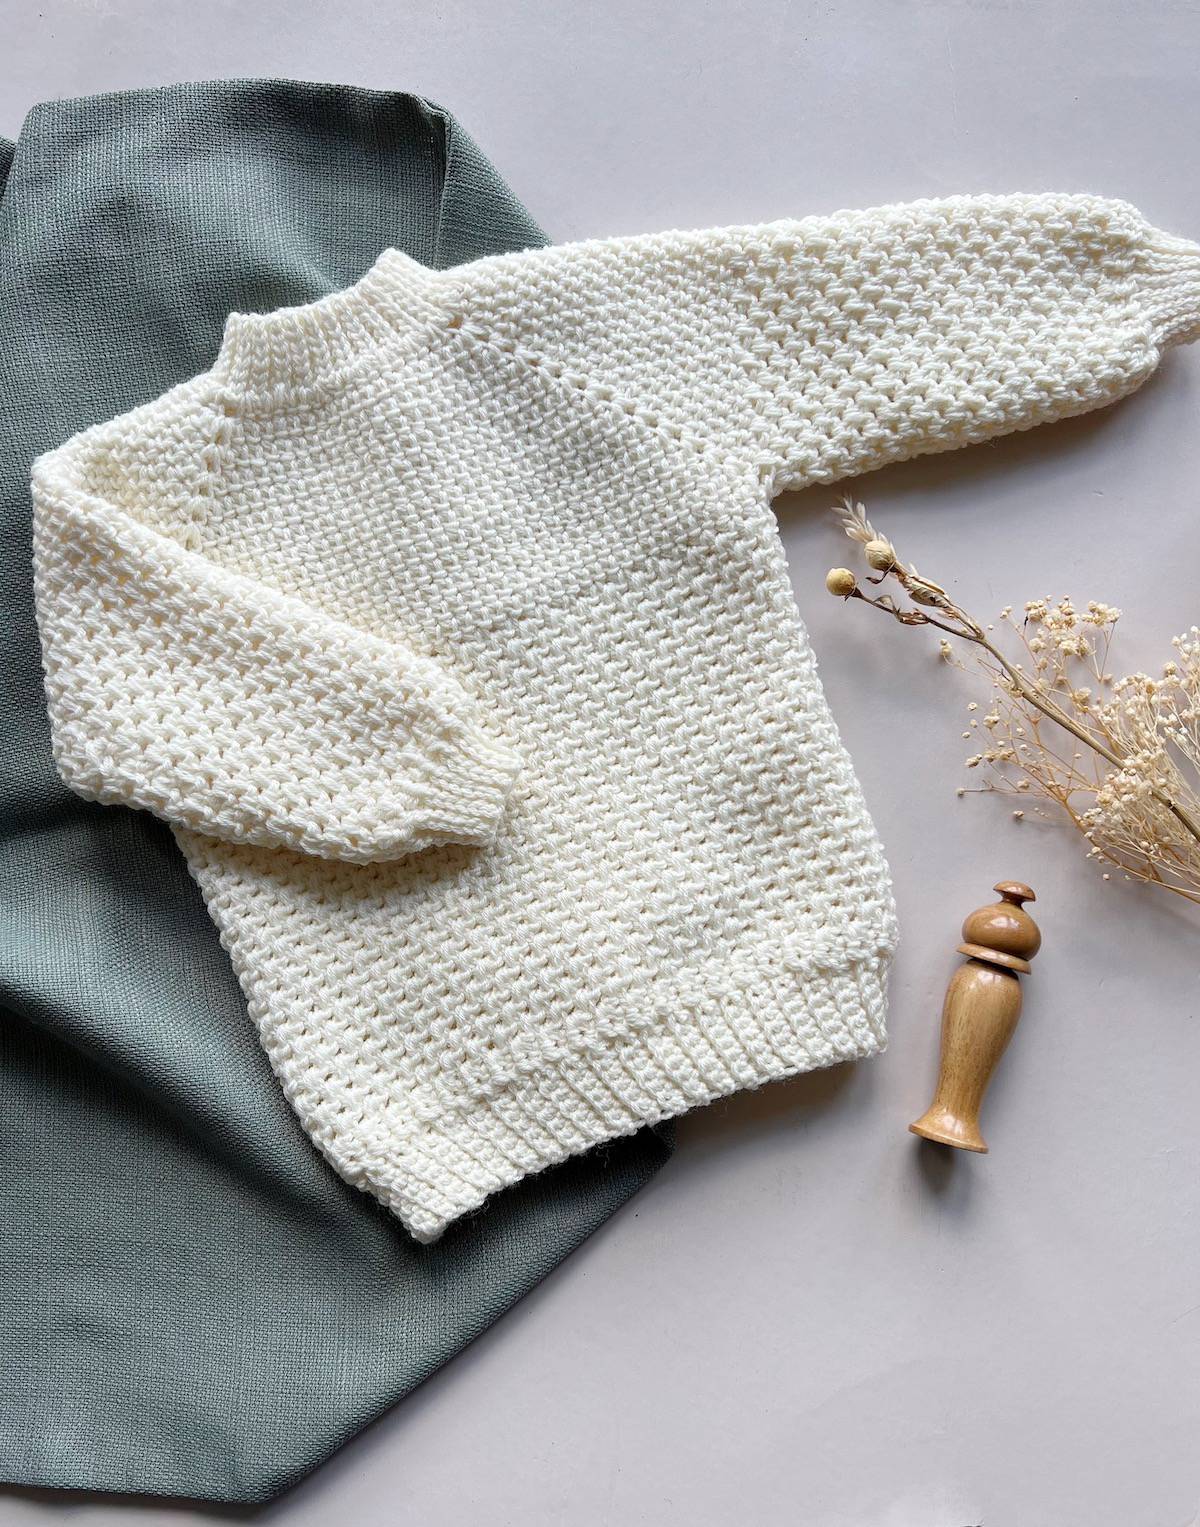 Seamless baby crochet sweater pattern with textured stitch in cream yarn.